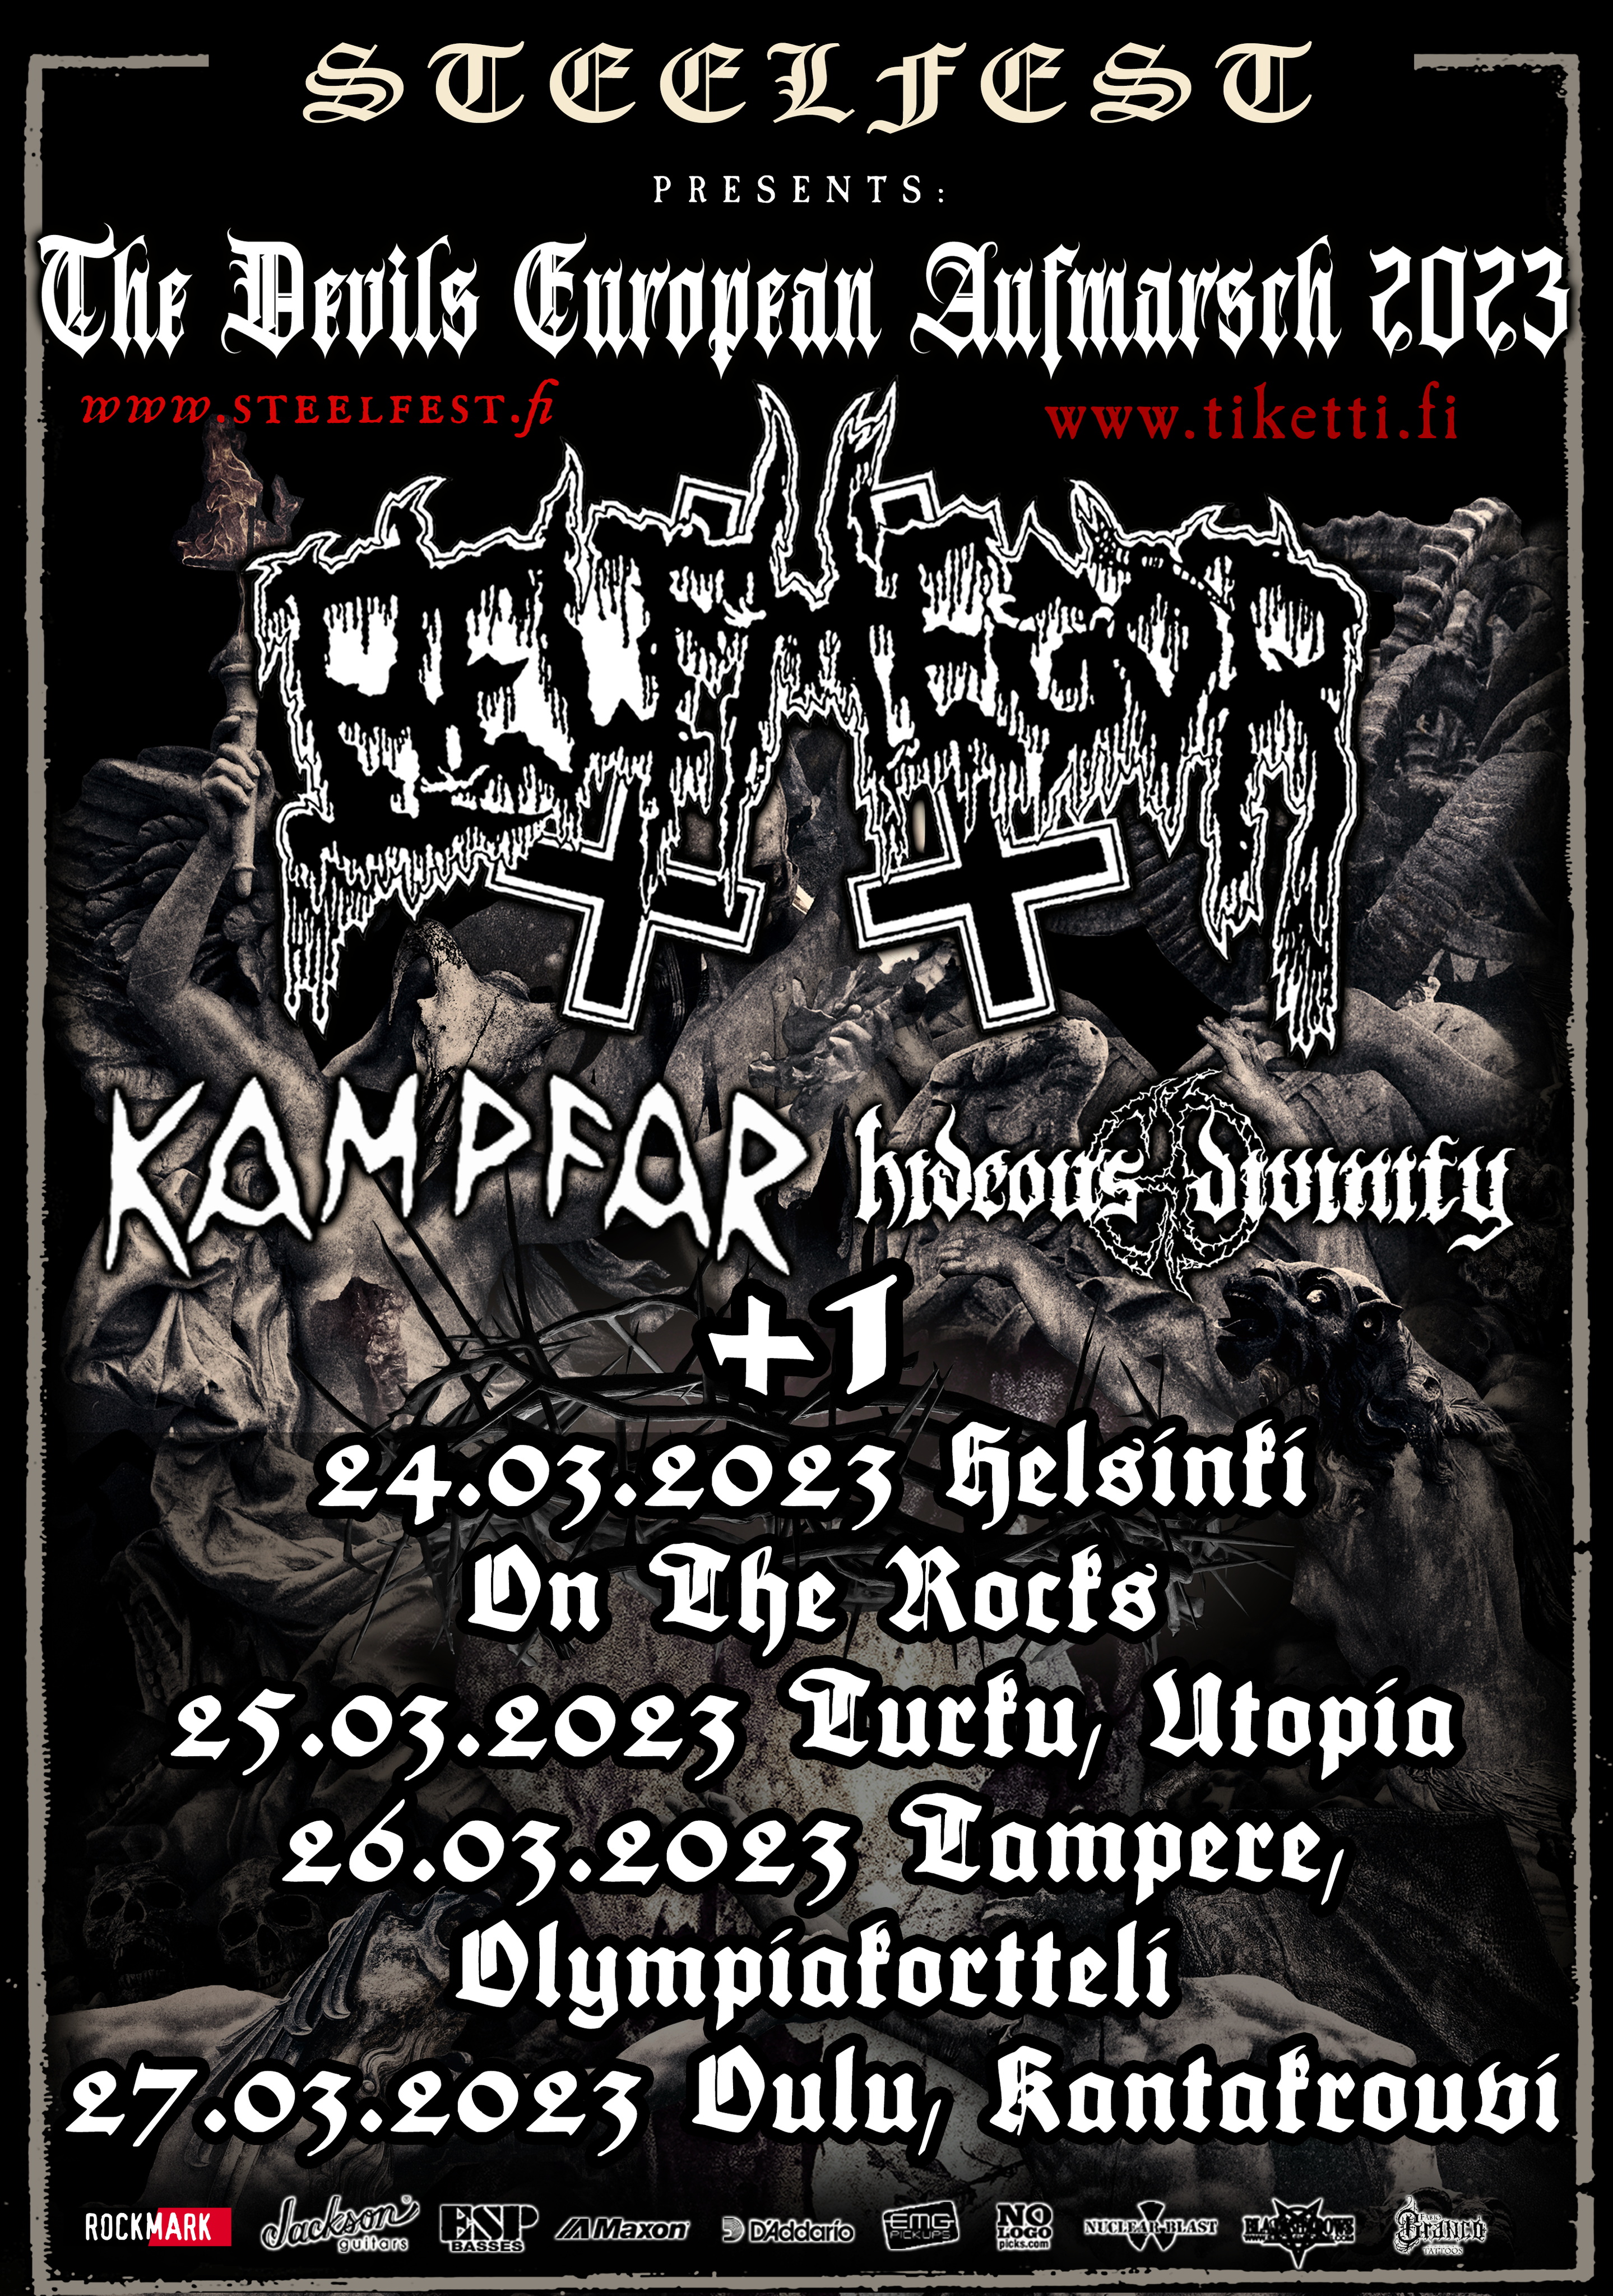 Featured image for “Steelfest presents: BELPHEGOR & KAMPFAR TOUR!”